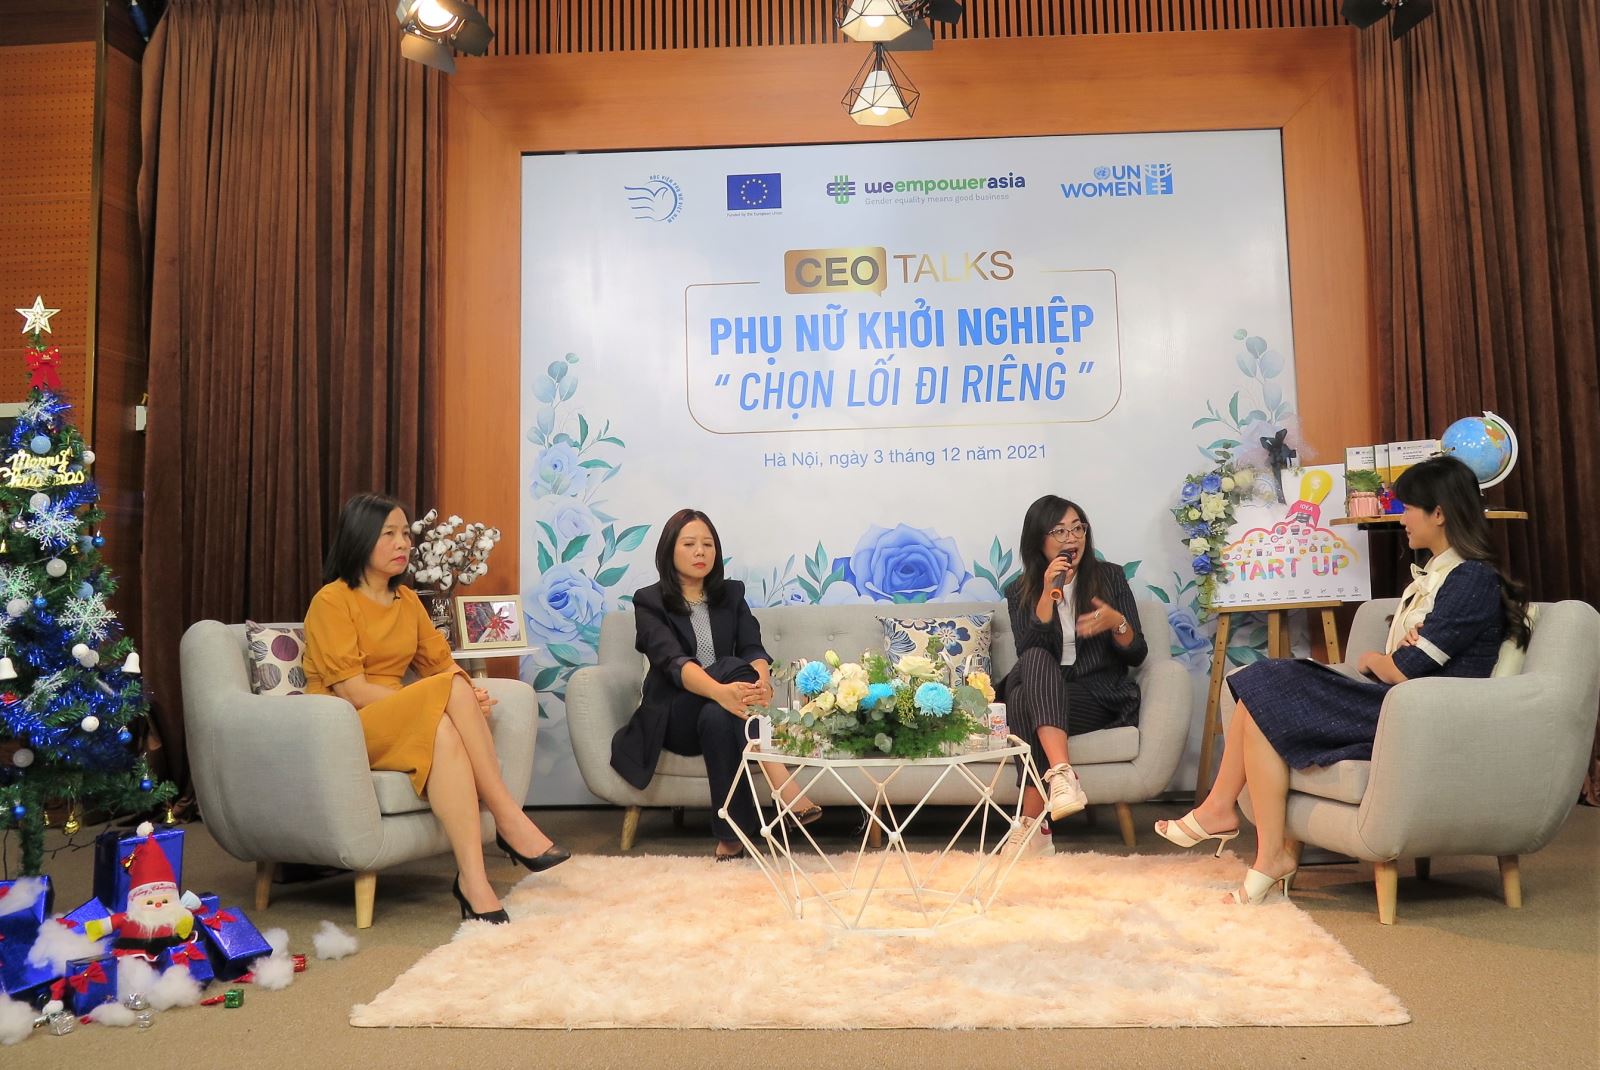 Việt Nam News: Women embrace path to entrepreneurship